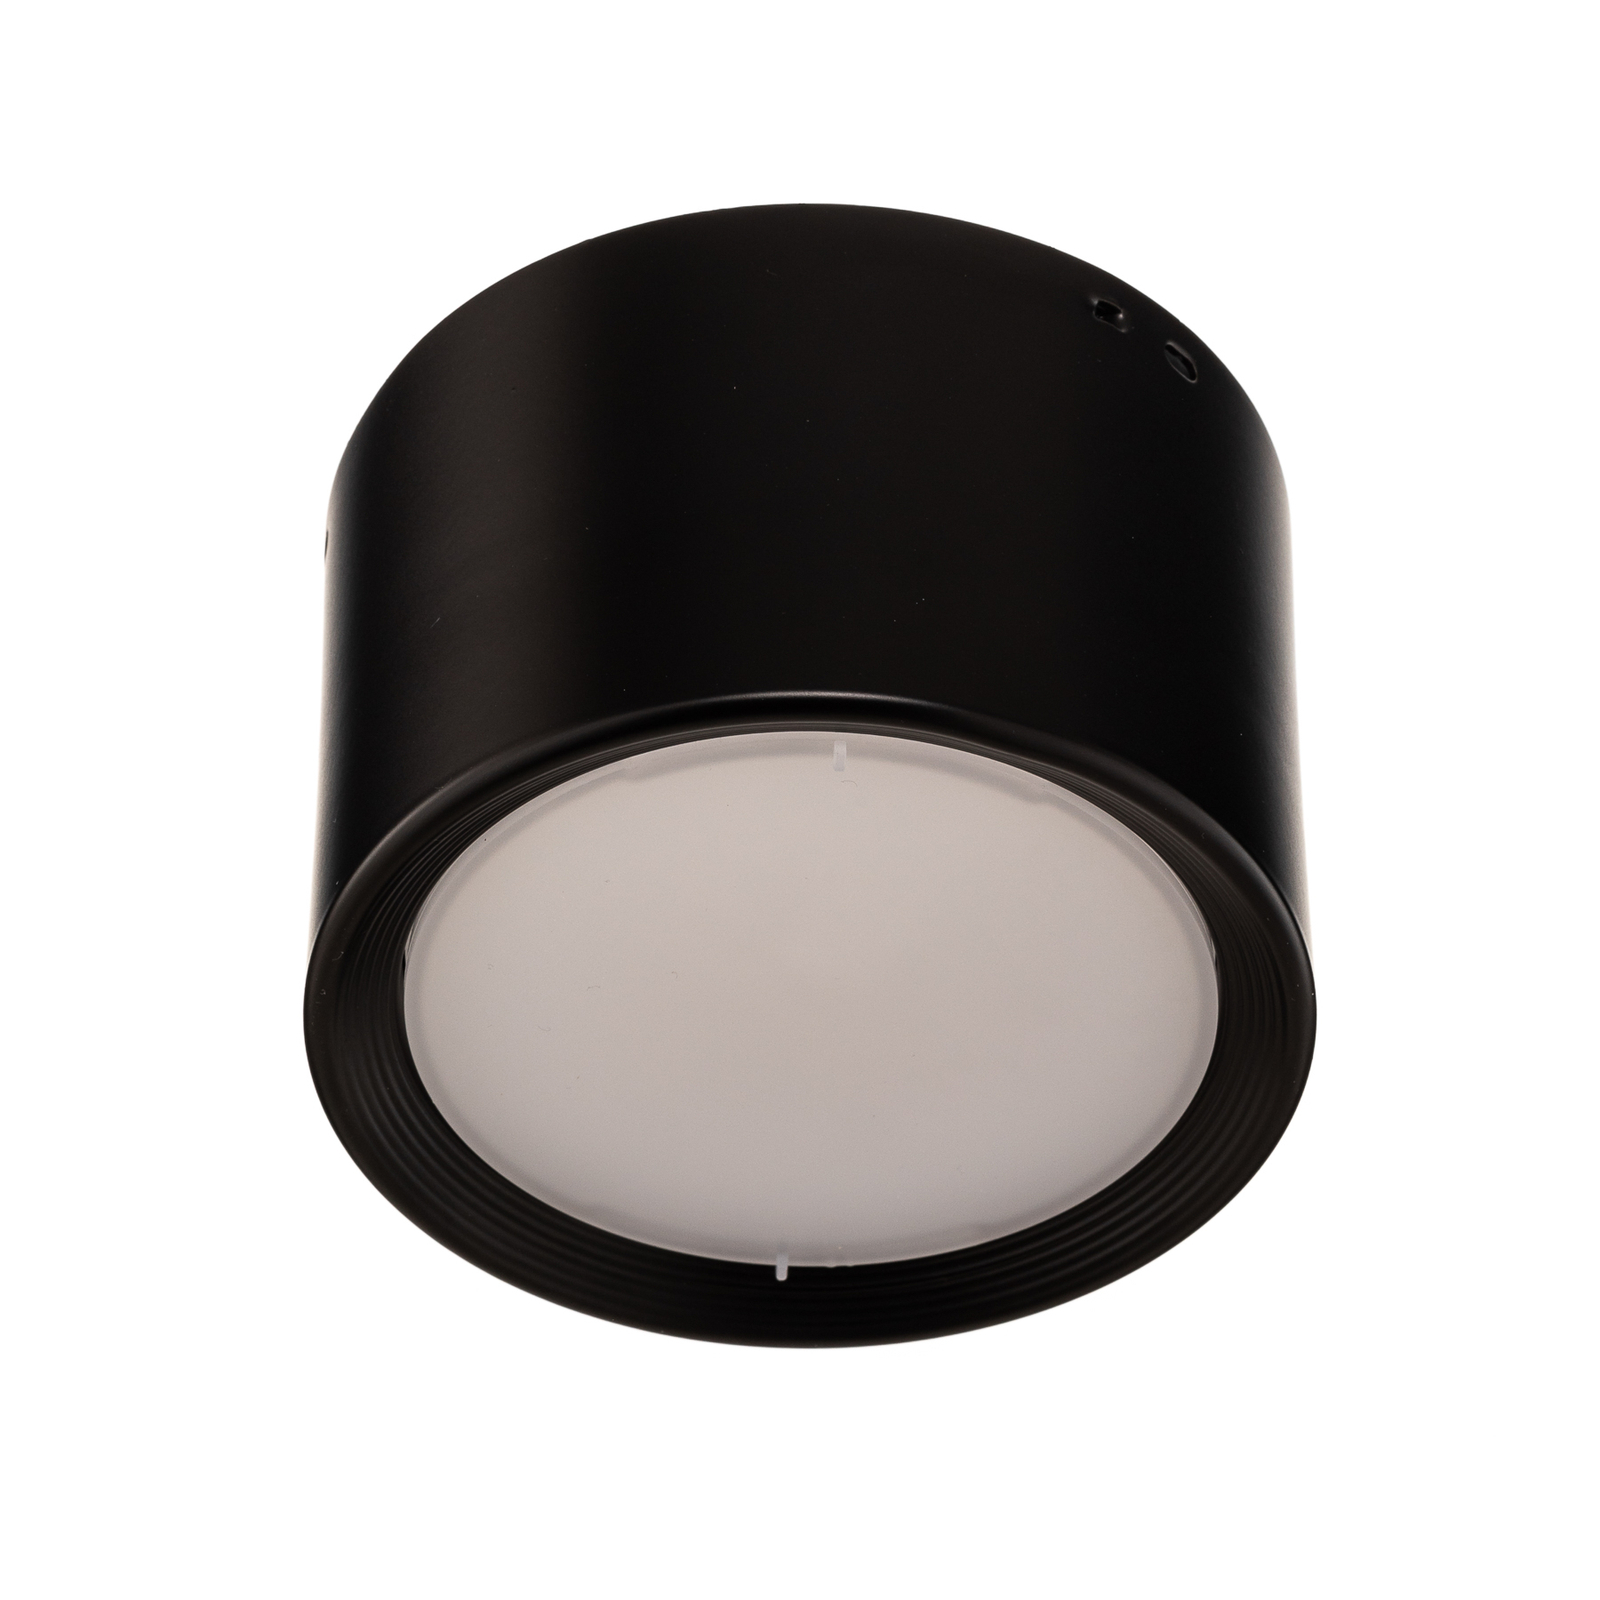 Ita LED downlight en negro con difusor, Ø 12 cm